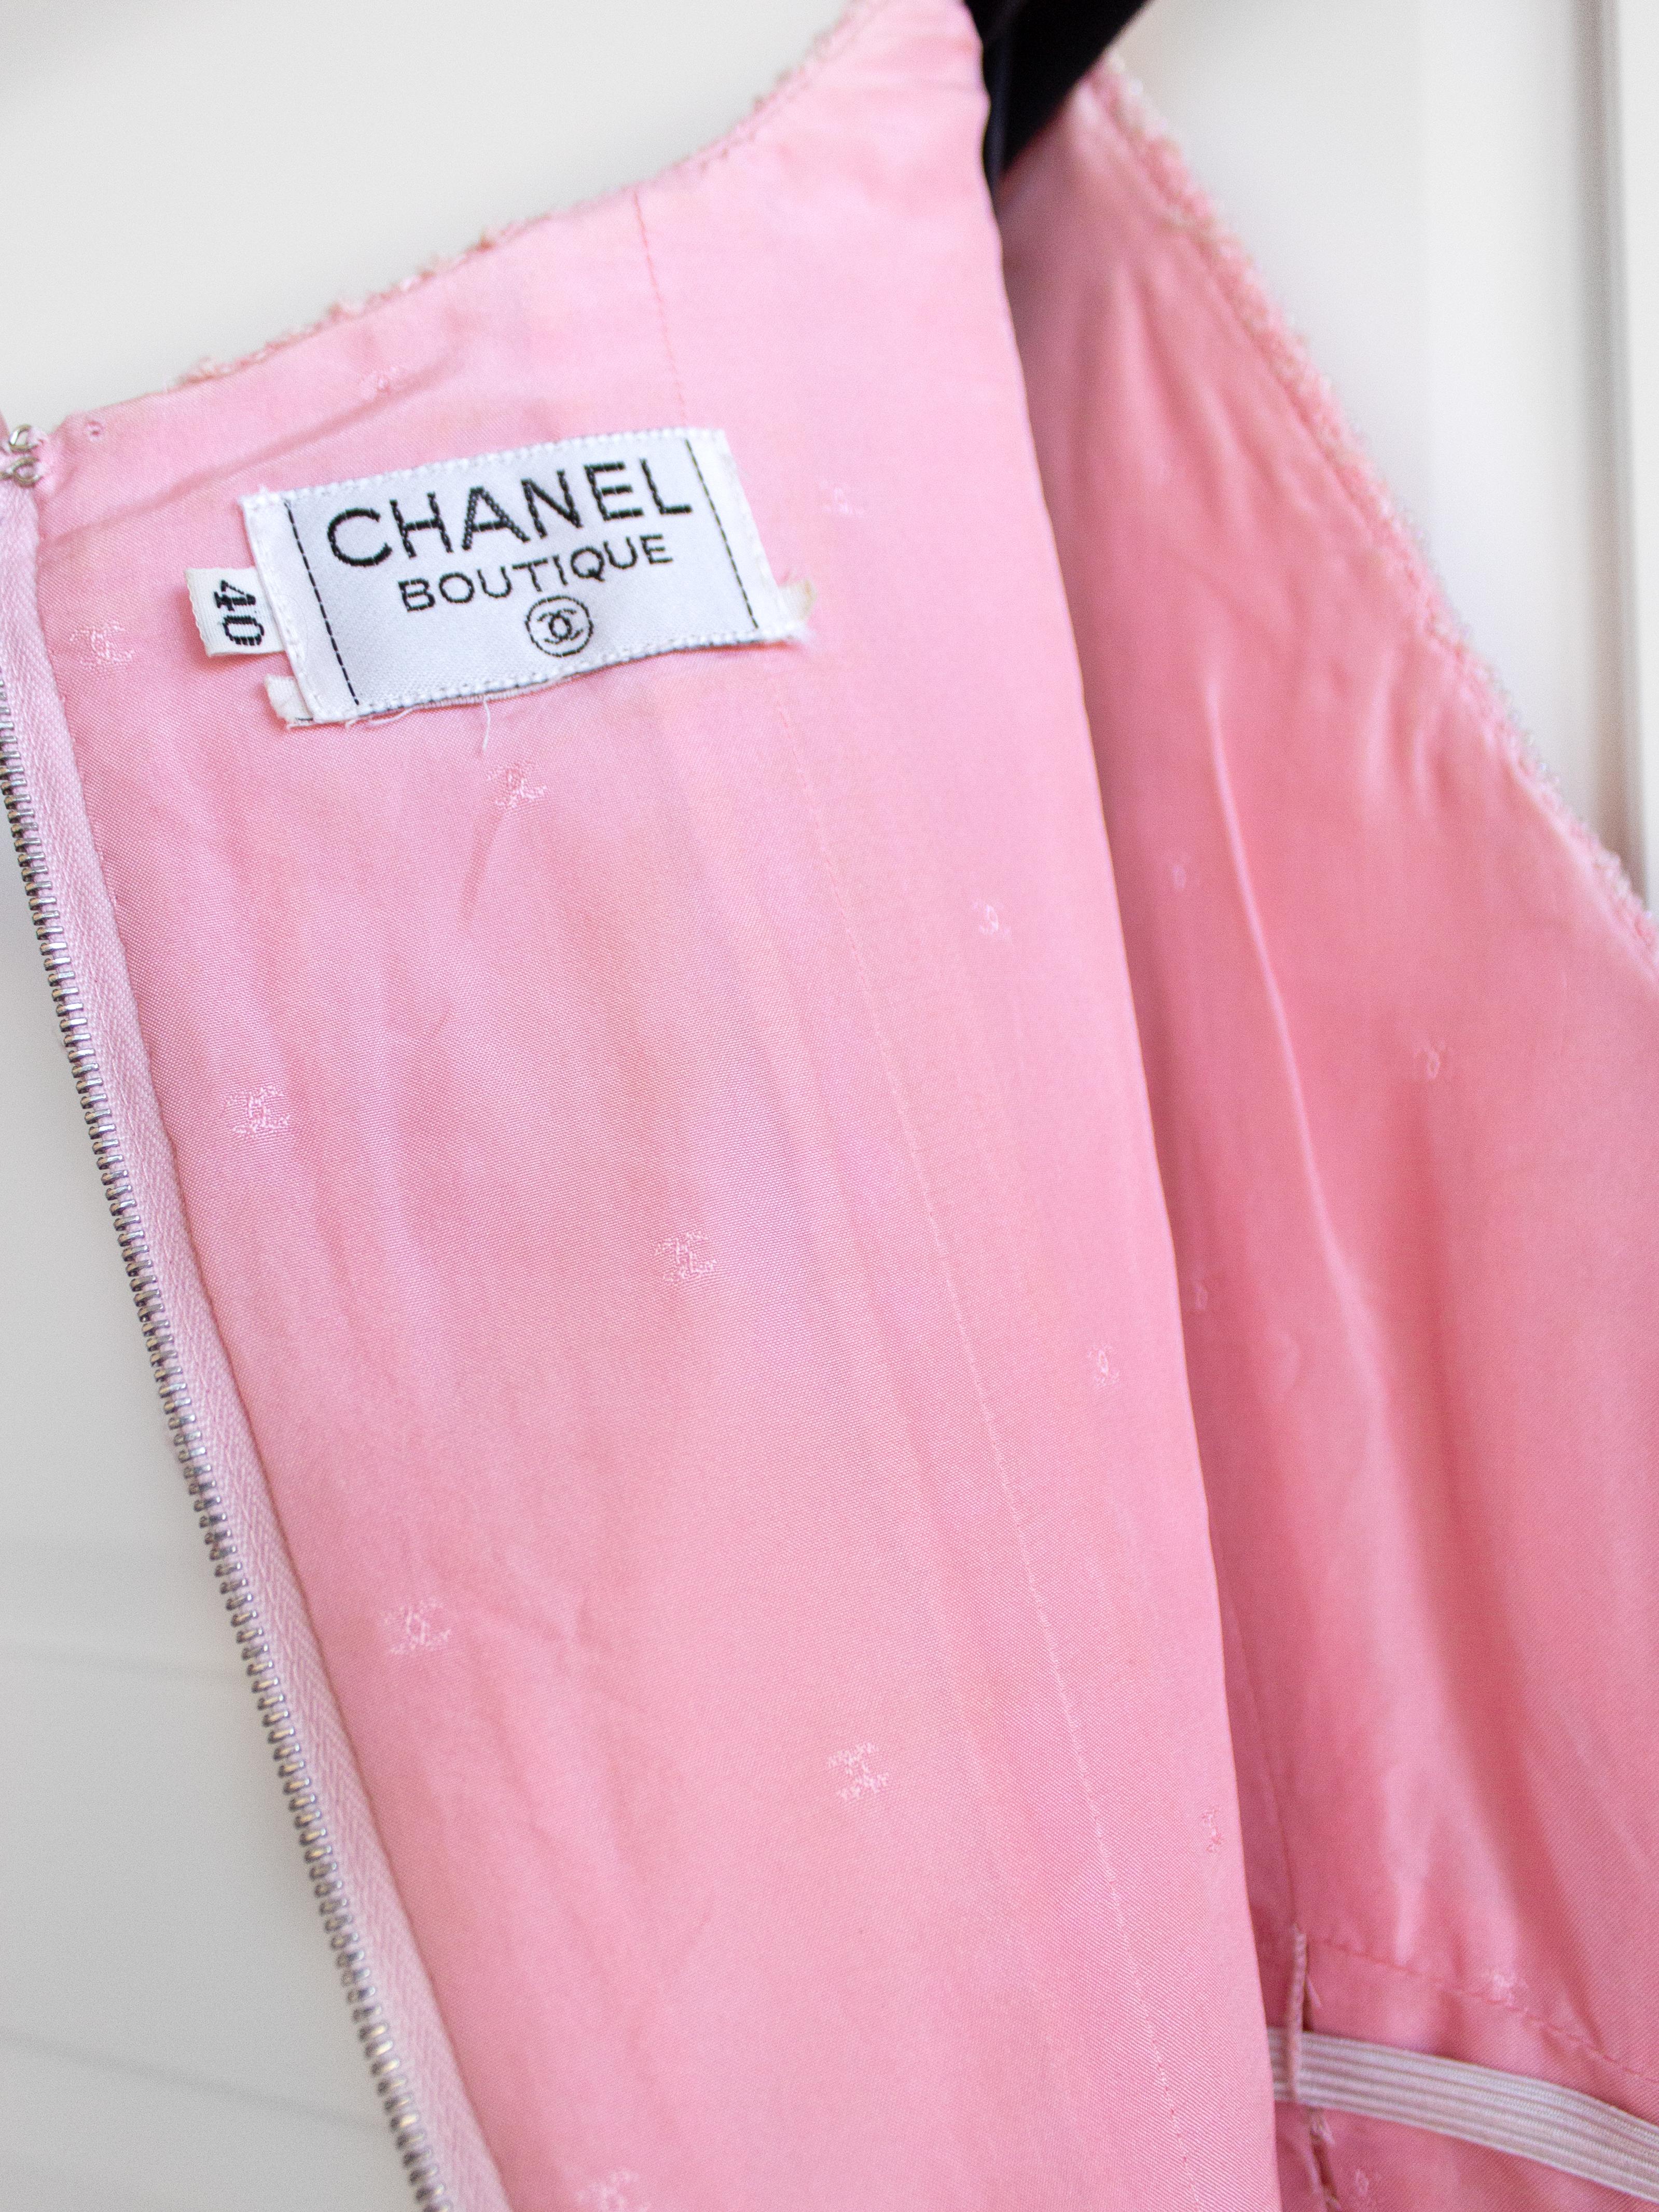 Iconic Chanel Vintage Spring 1994 Pink Tweed Corset Dress Skirt 94P Suit Set 2